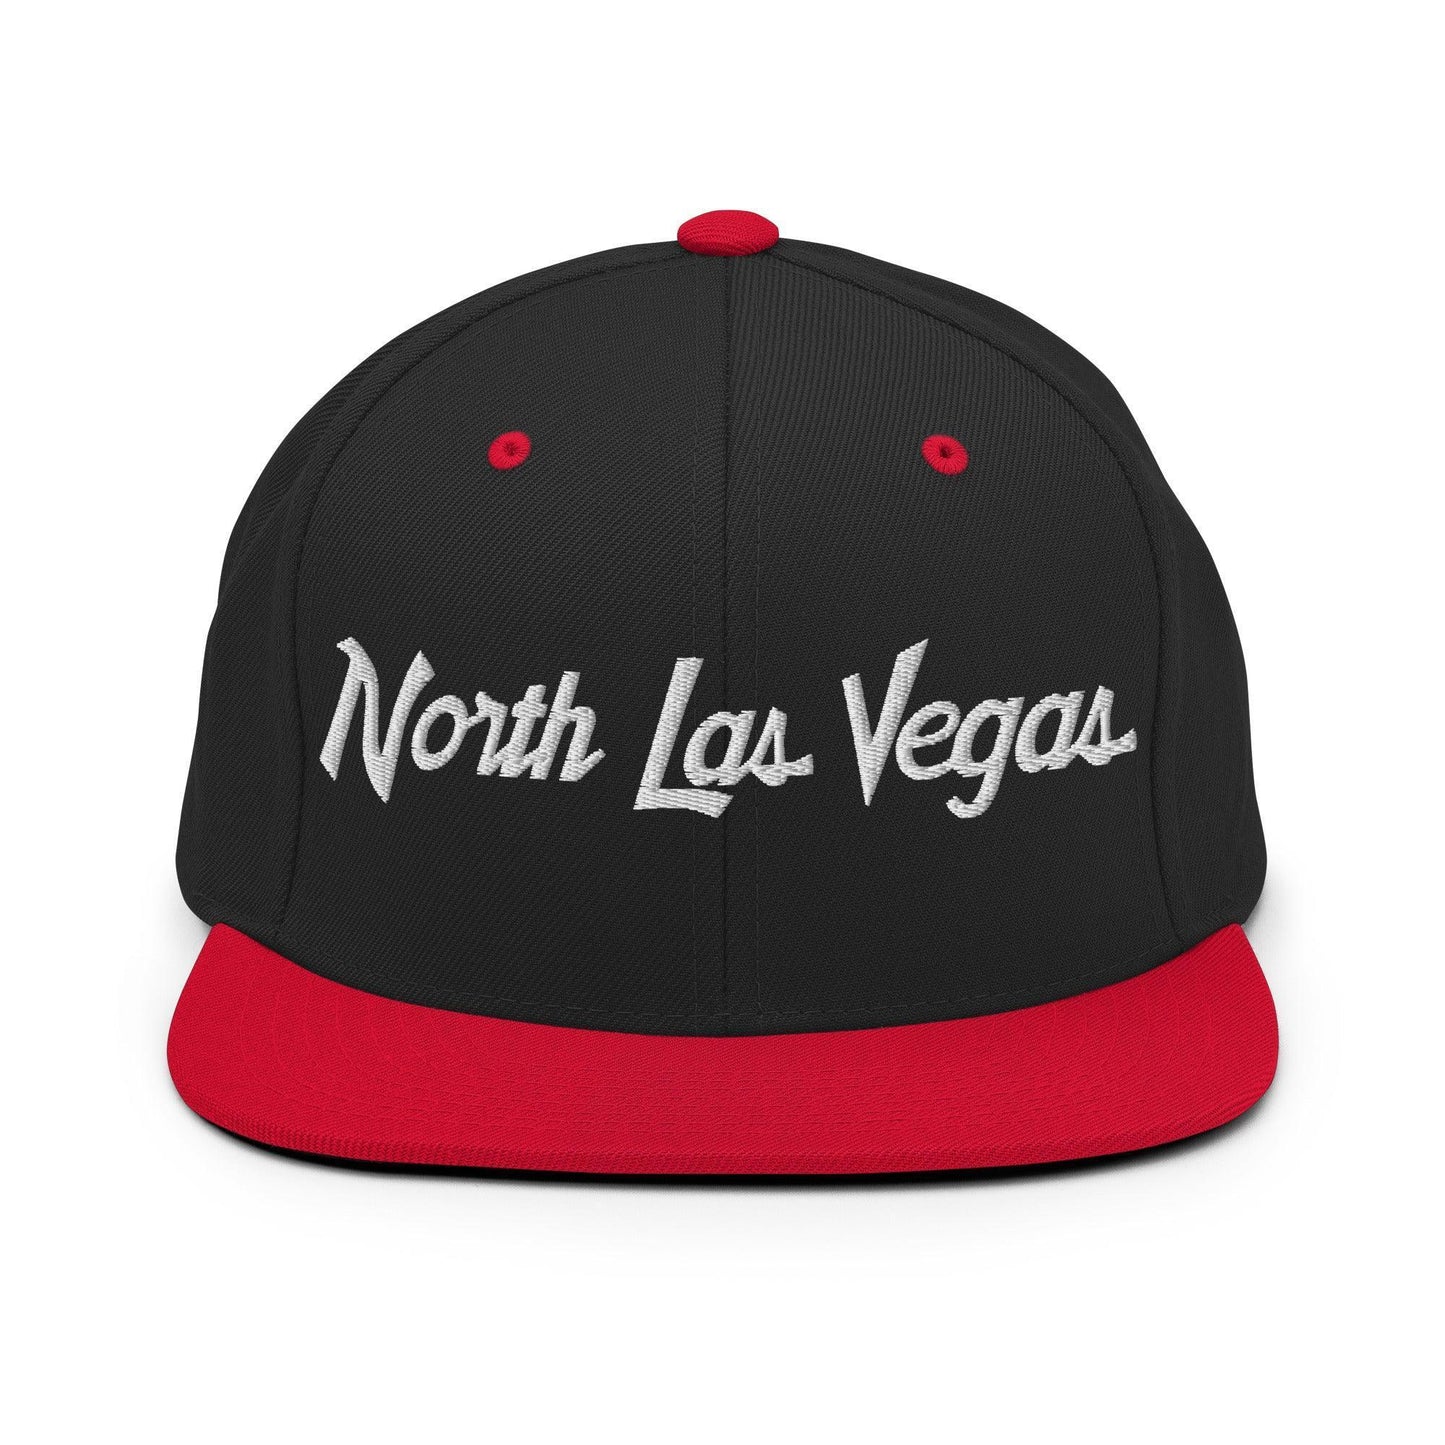 North Las Vegas Script Snapback Hat Black/ Red